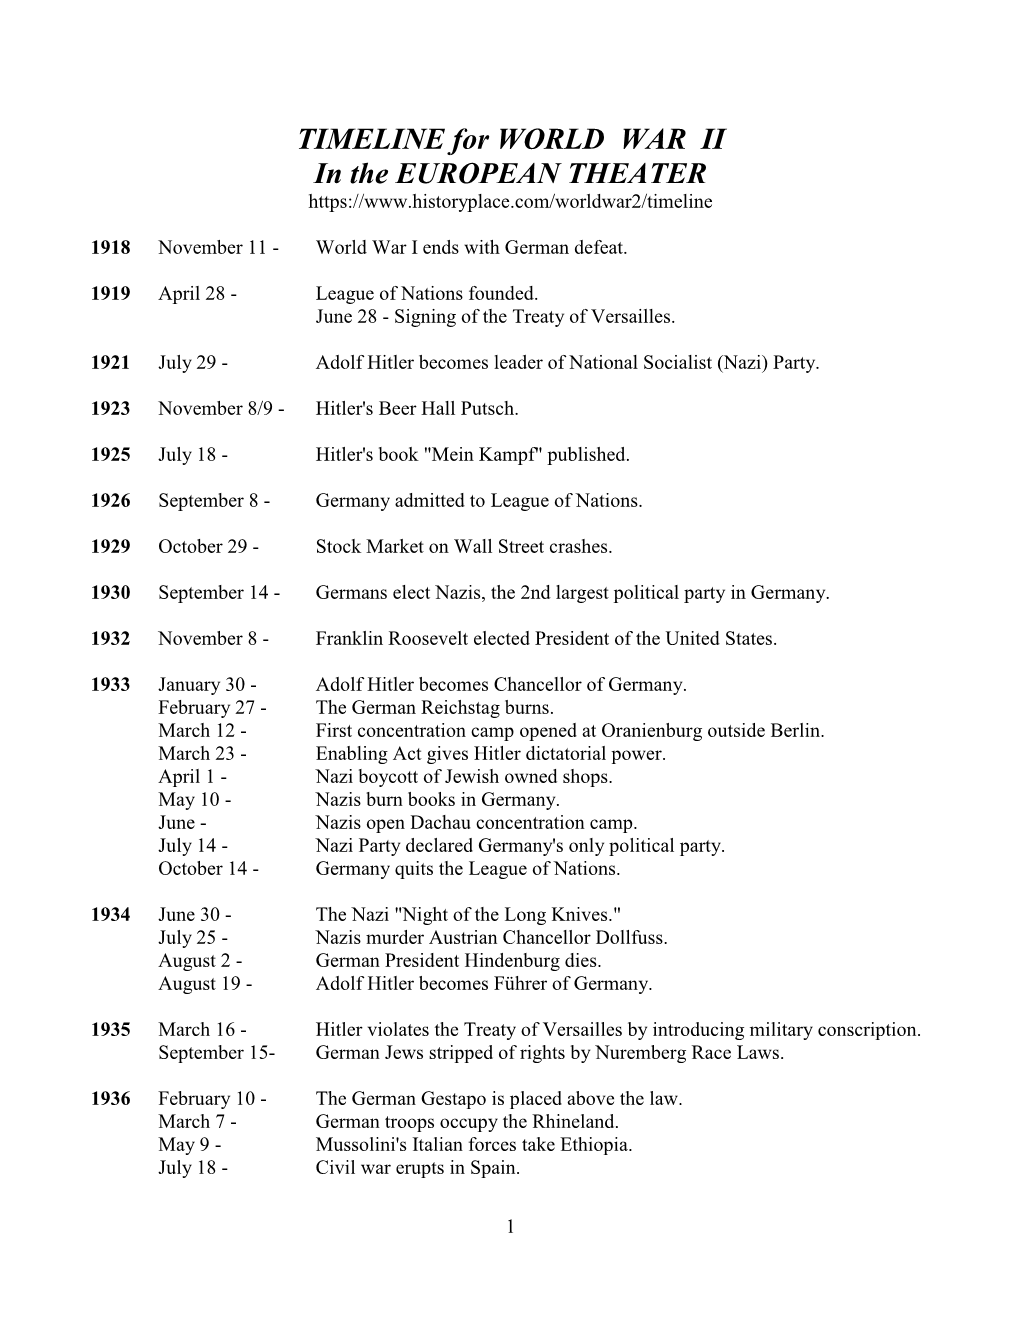 TIMELINE for WORLD WAR II in the EUROPEAN THEATER - DocsLib